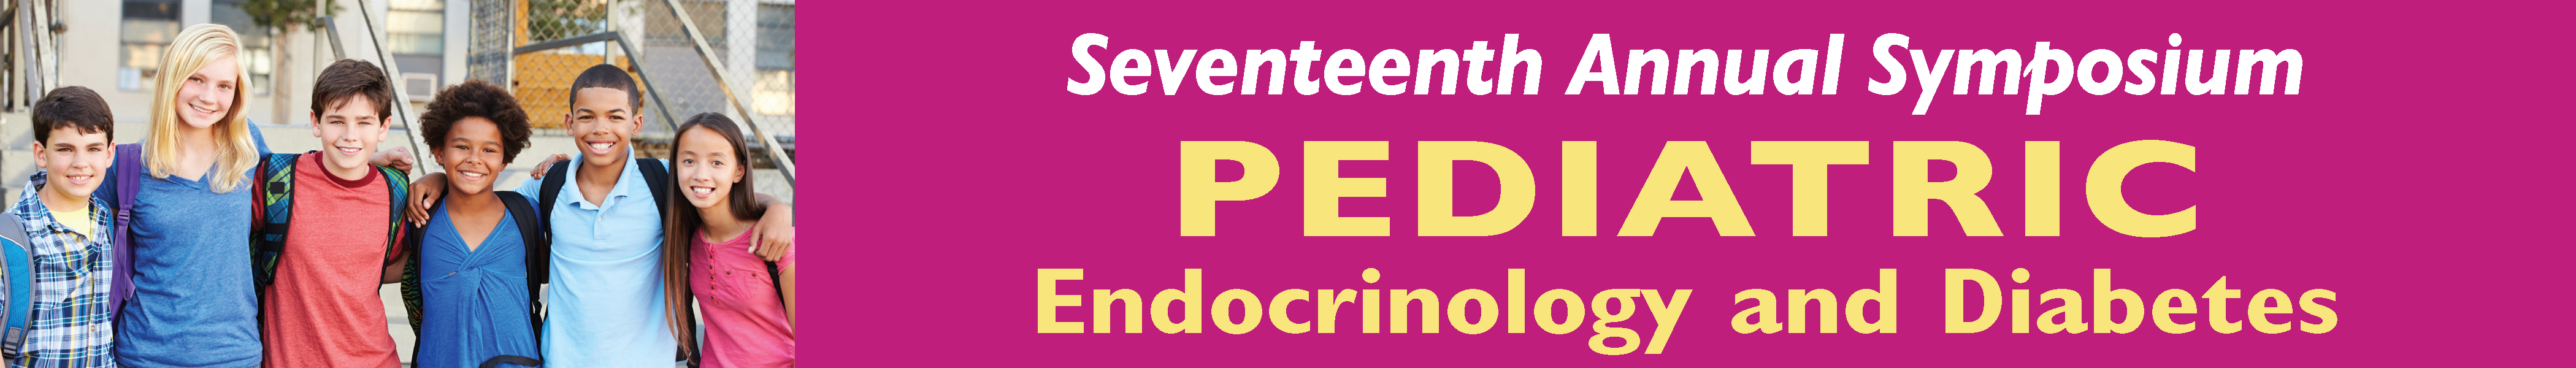 Seventeenth Annual Pediatric Endocrinology and Diabetes Symposium Banner